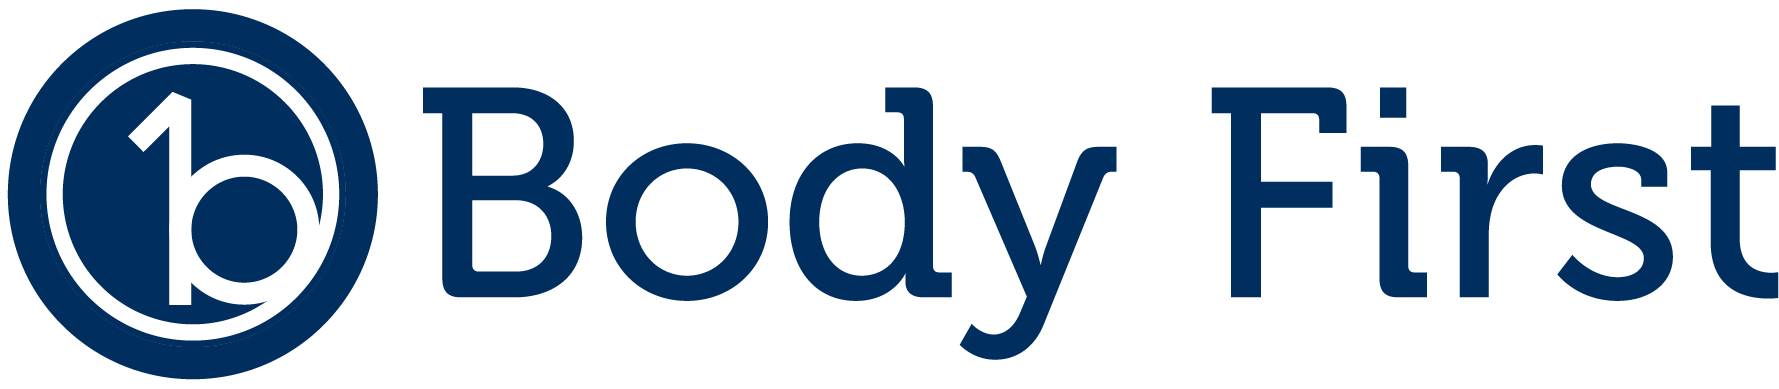 Body First logo